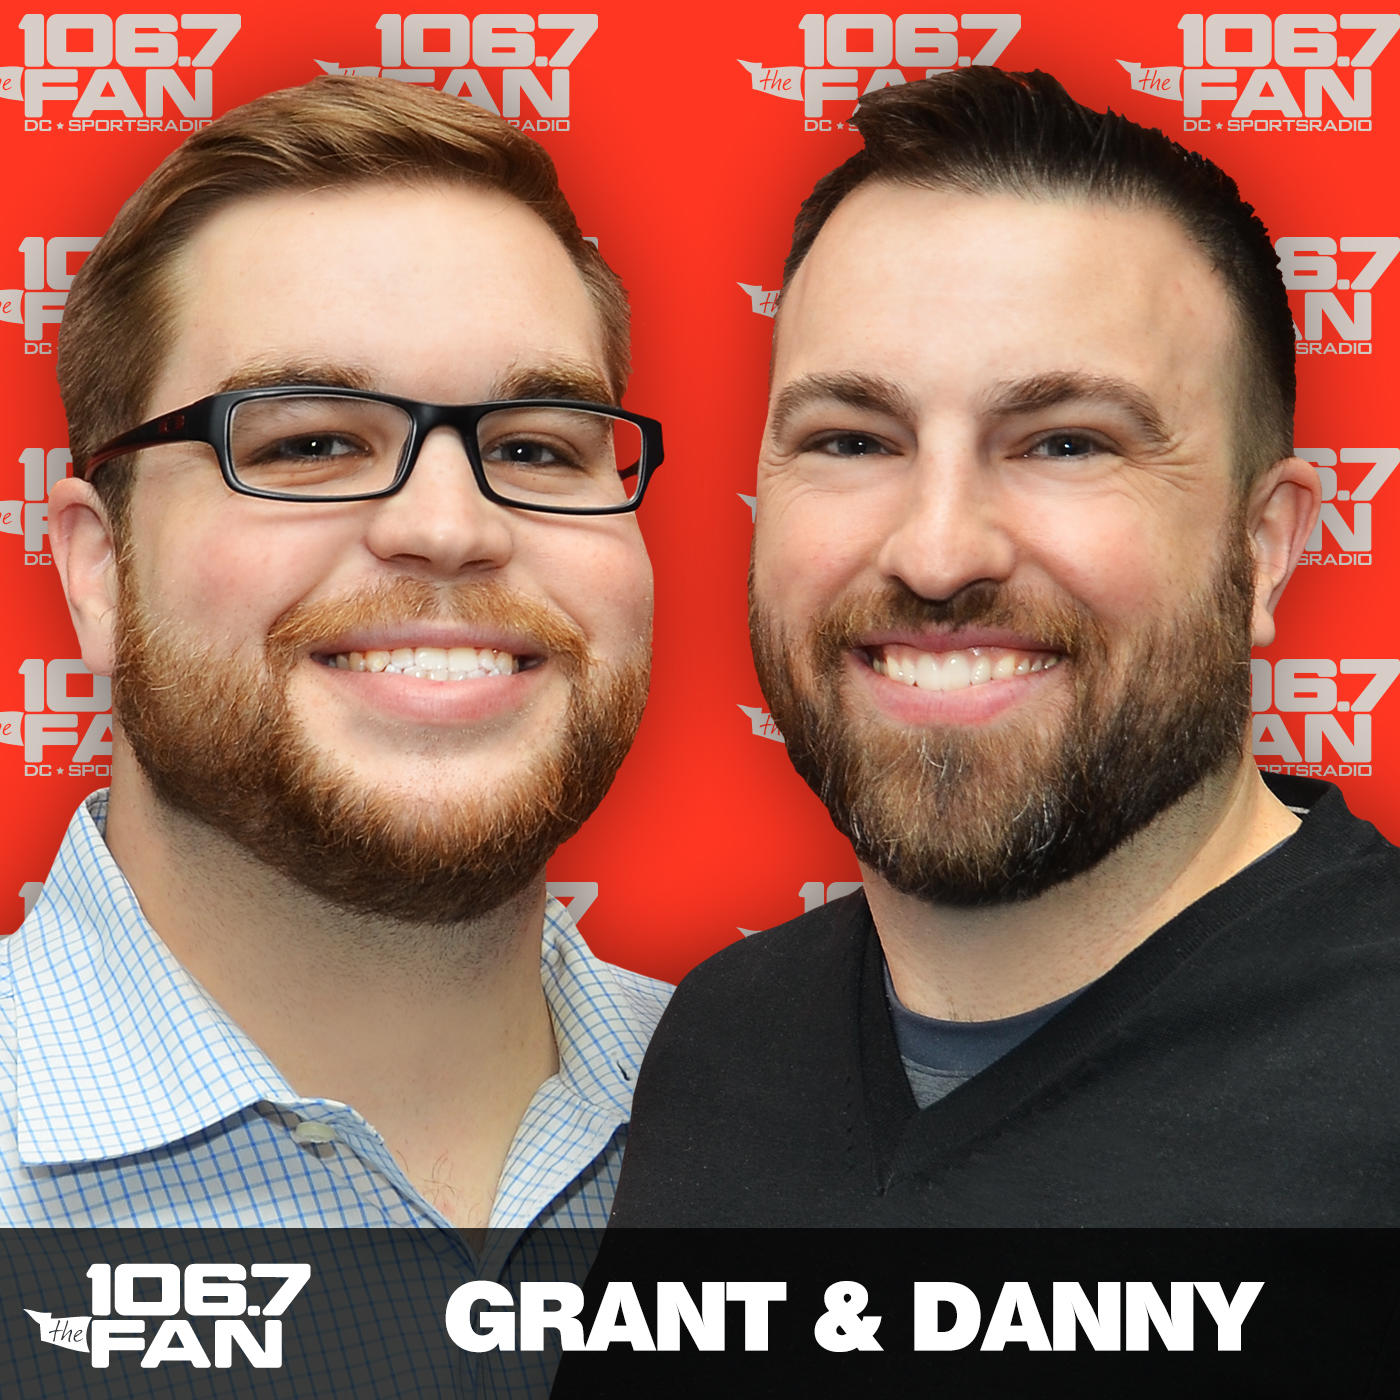 Team Grant or Team Danny?